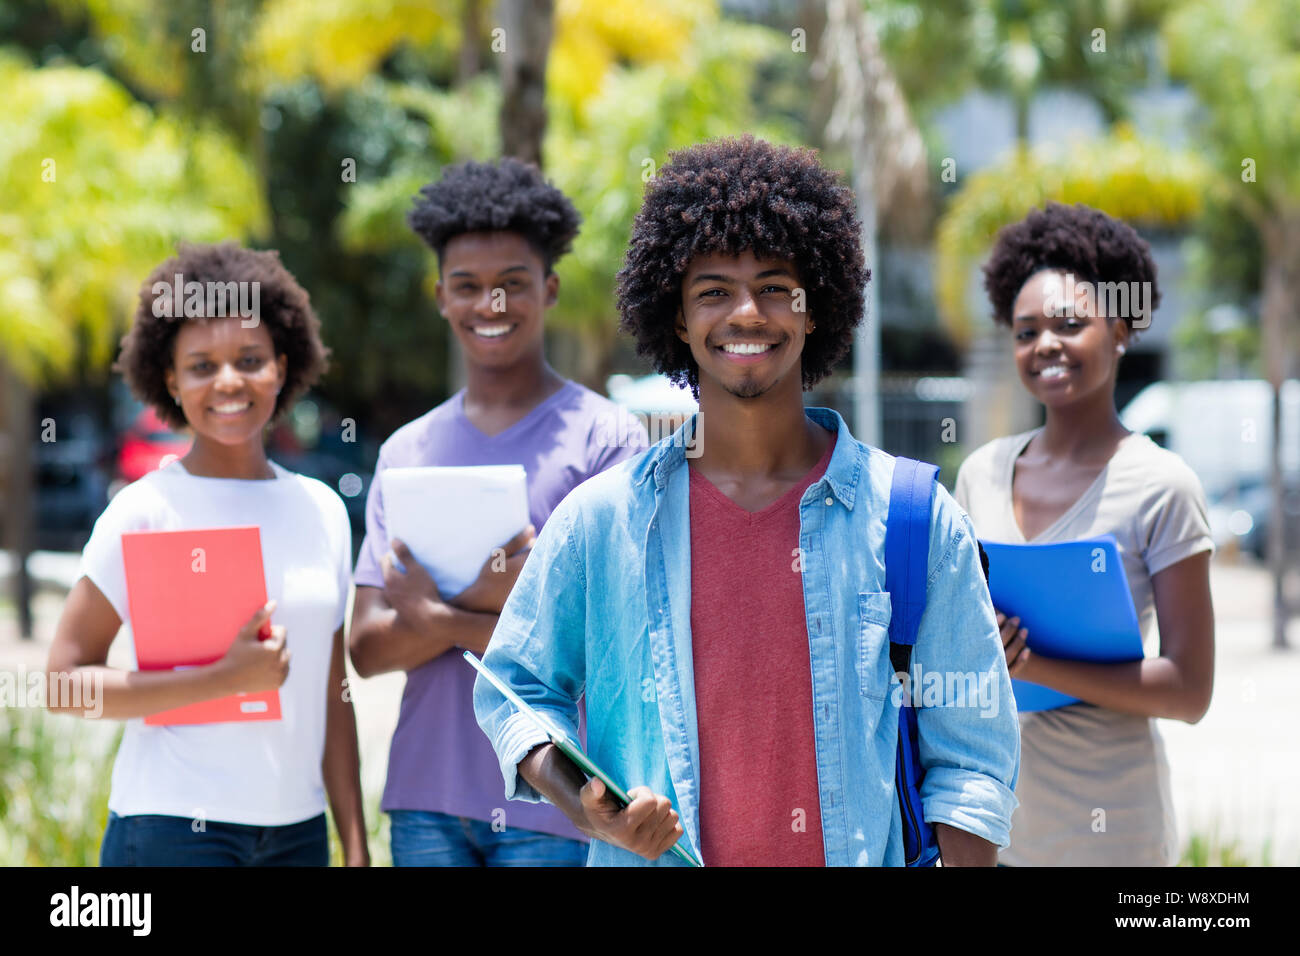 African American studente universitario con gruppo di African American studenti all'aperto in estate Foto Stock